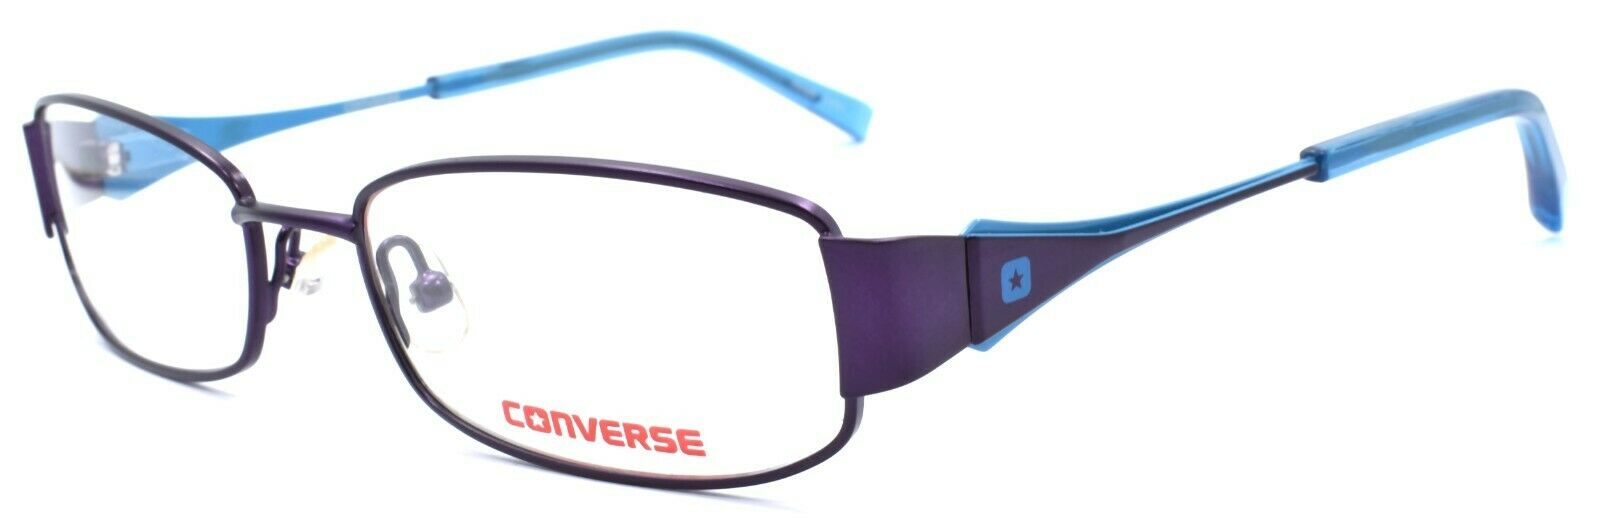 1-CONVERSE K002 Kids Eyeglasses Frames 50-17-135 Purple + CASE-751286244786-IKSpecs